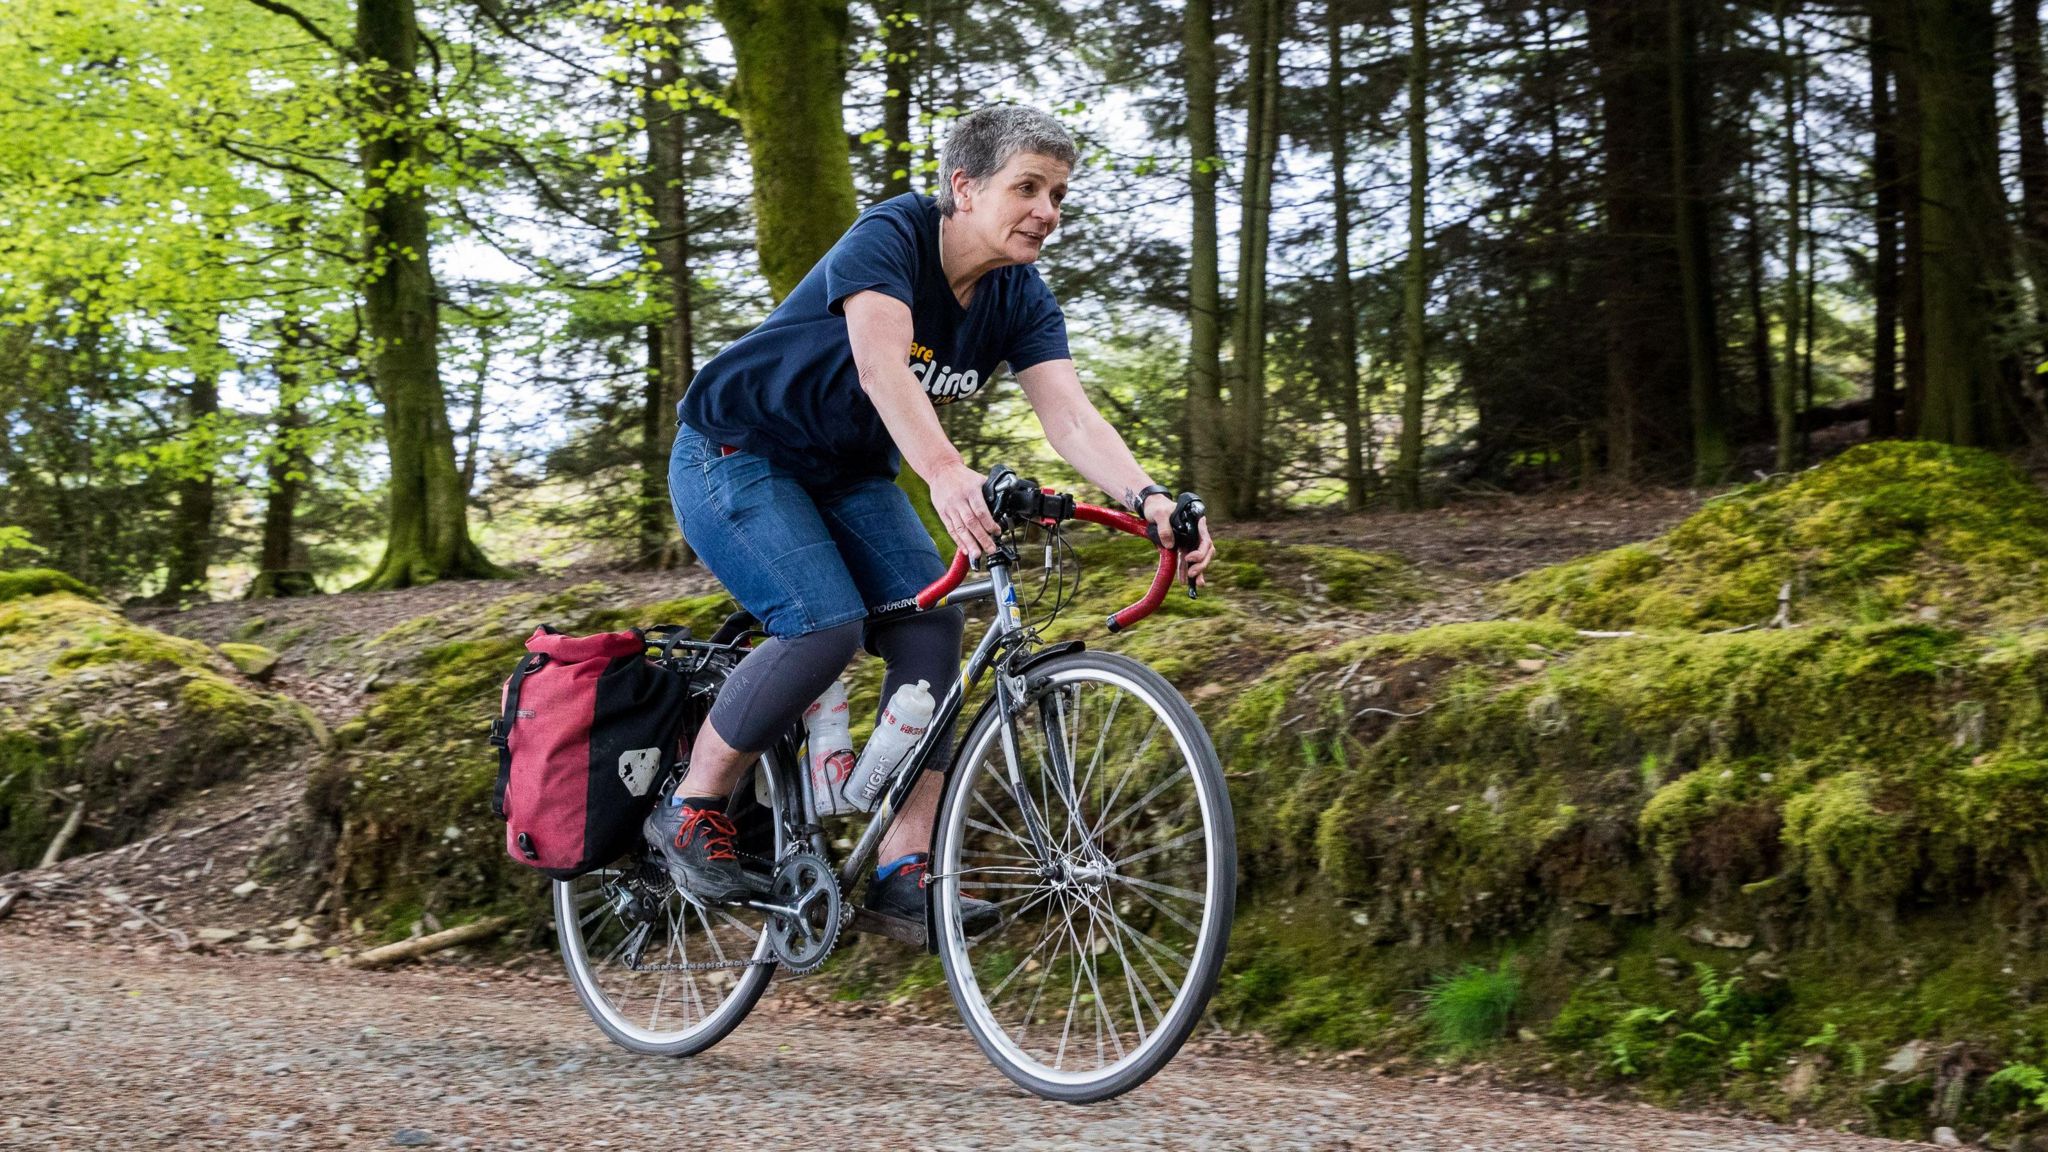 Glenda Owen on a bike